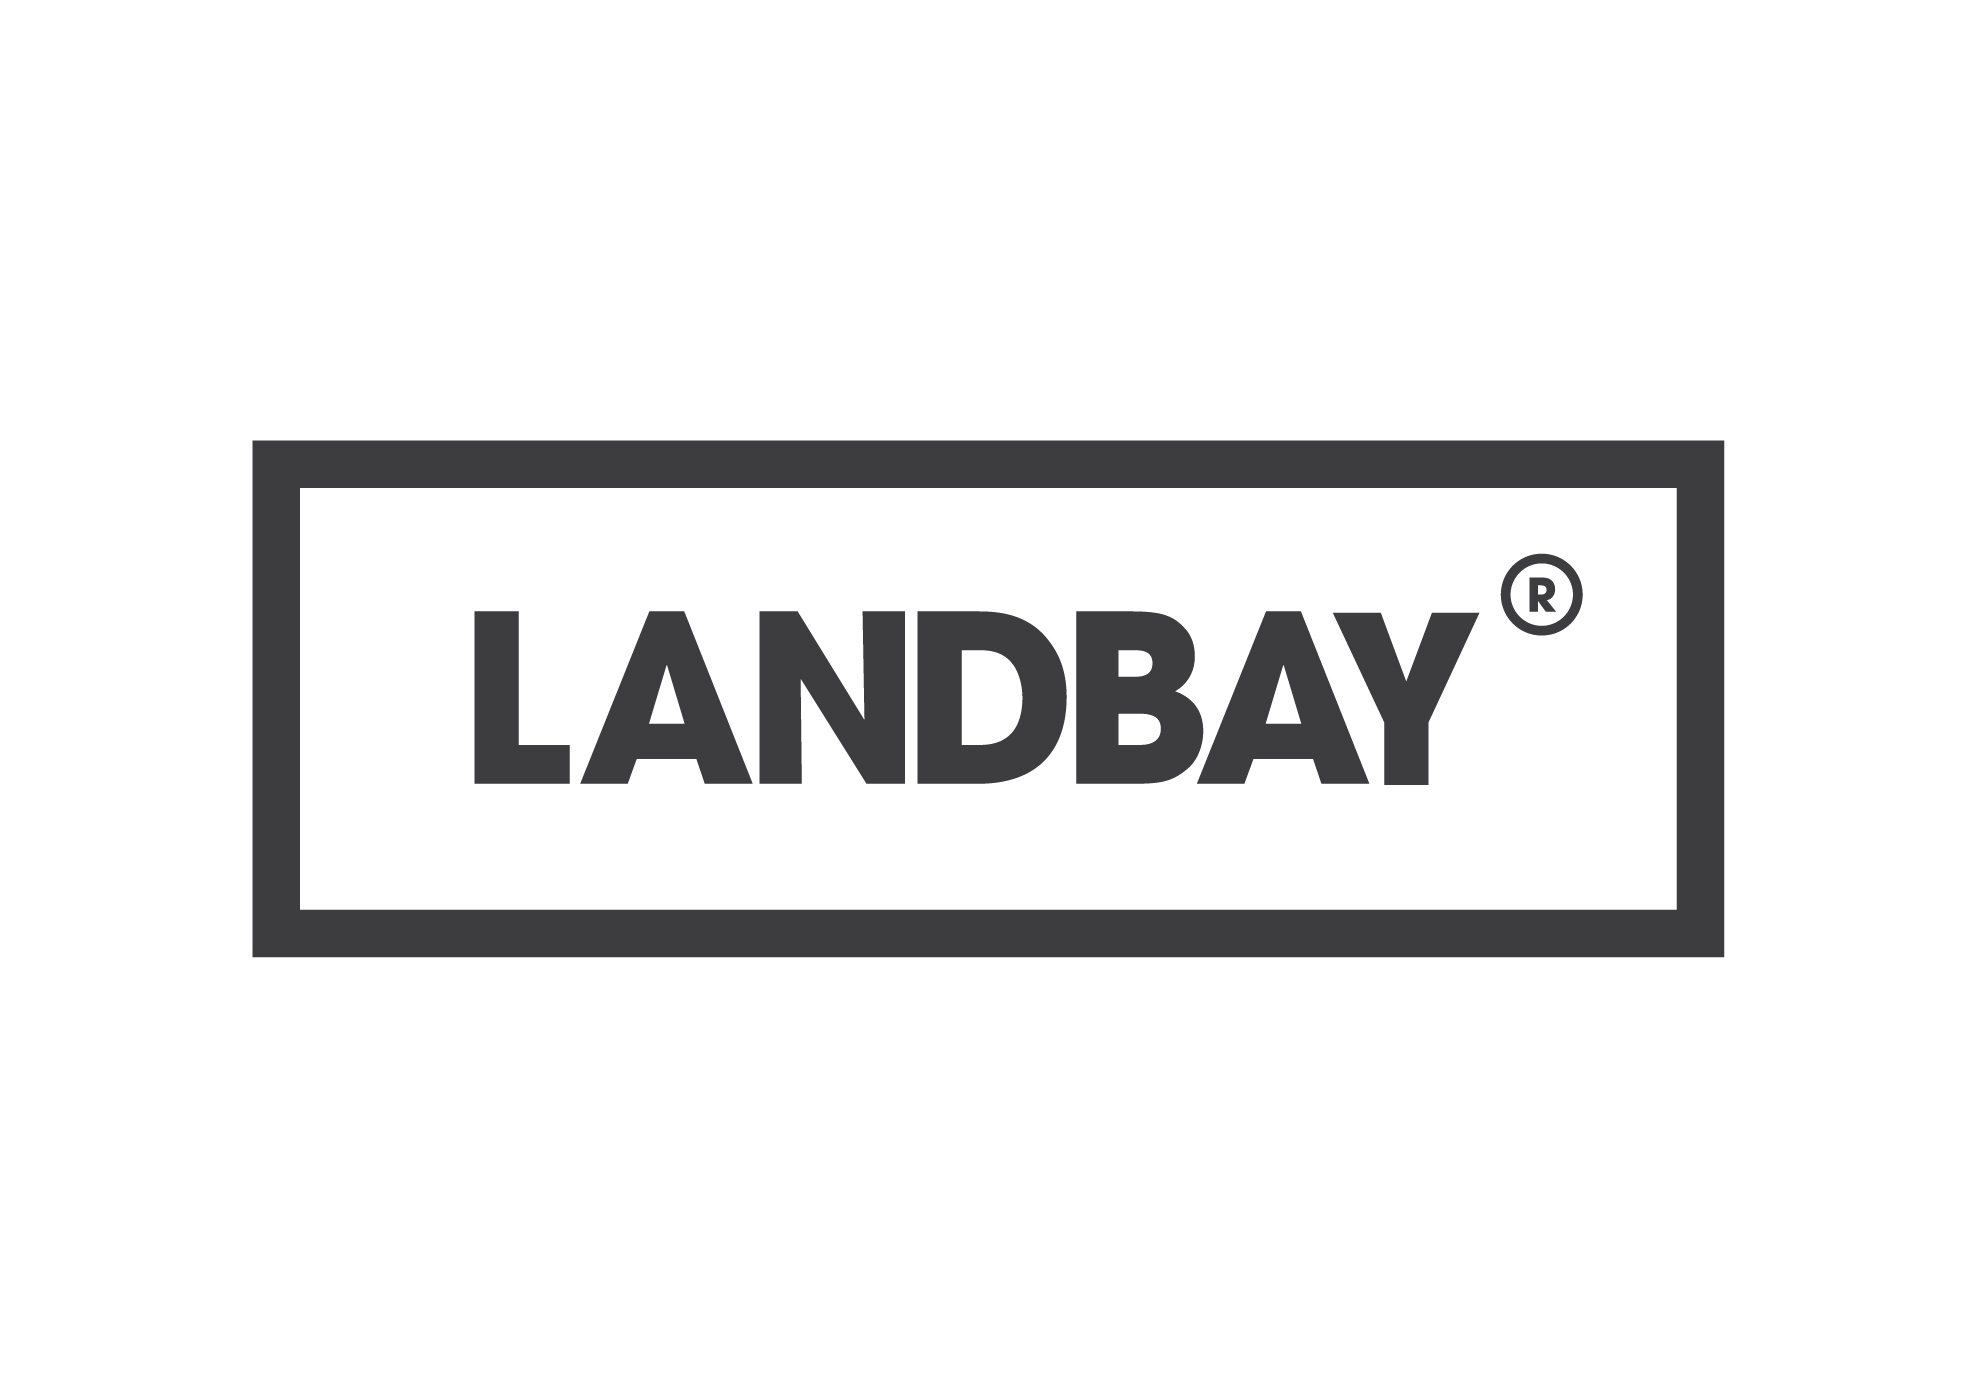 Landbay : Brand Short Description Type Here.